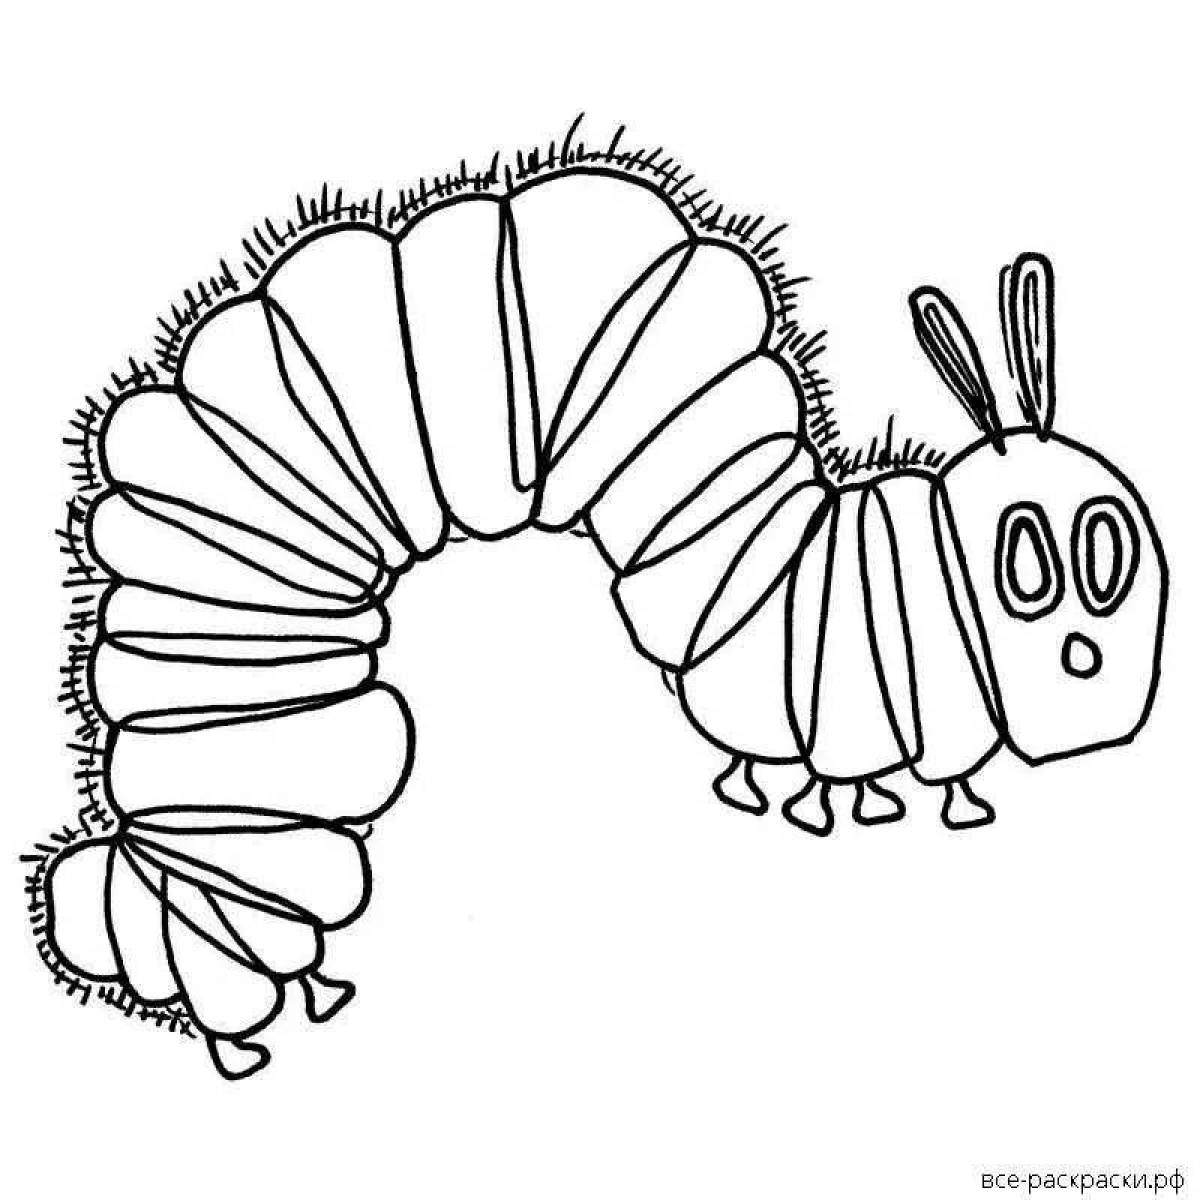 Coloring page nice dog caterpillar